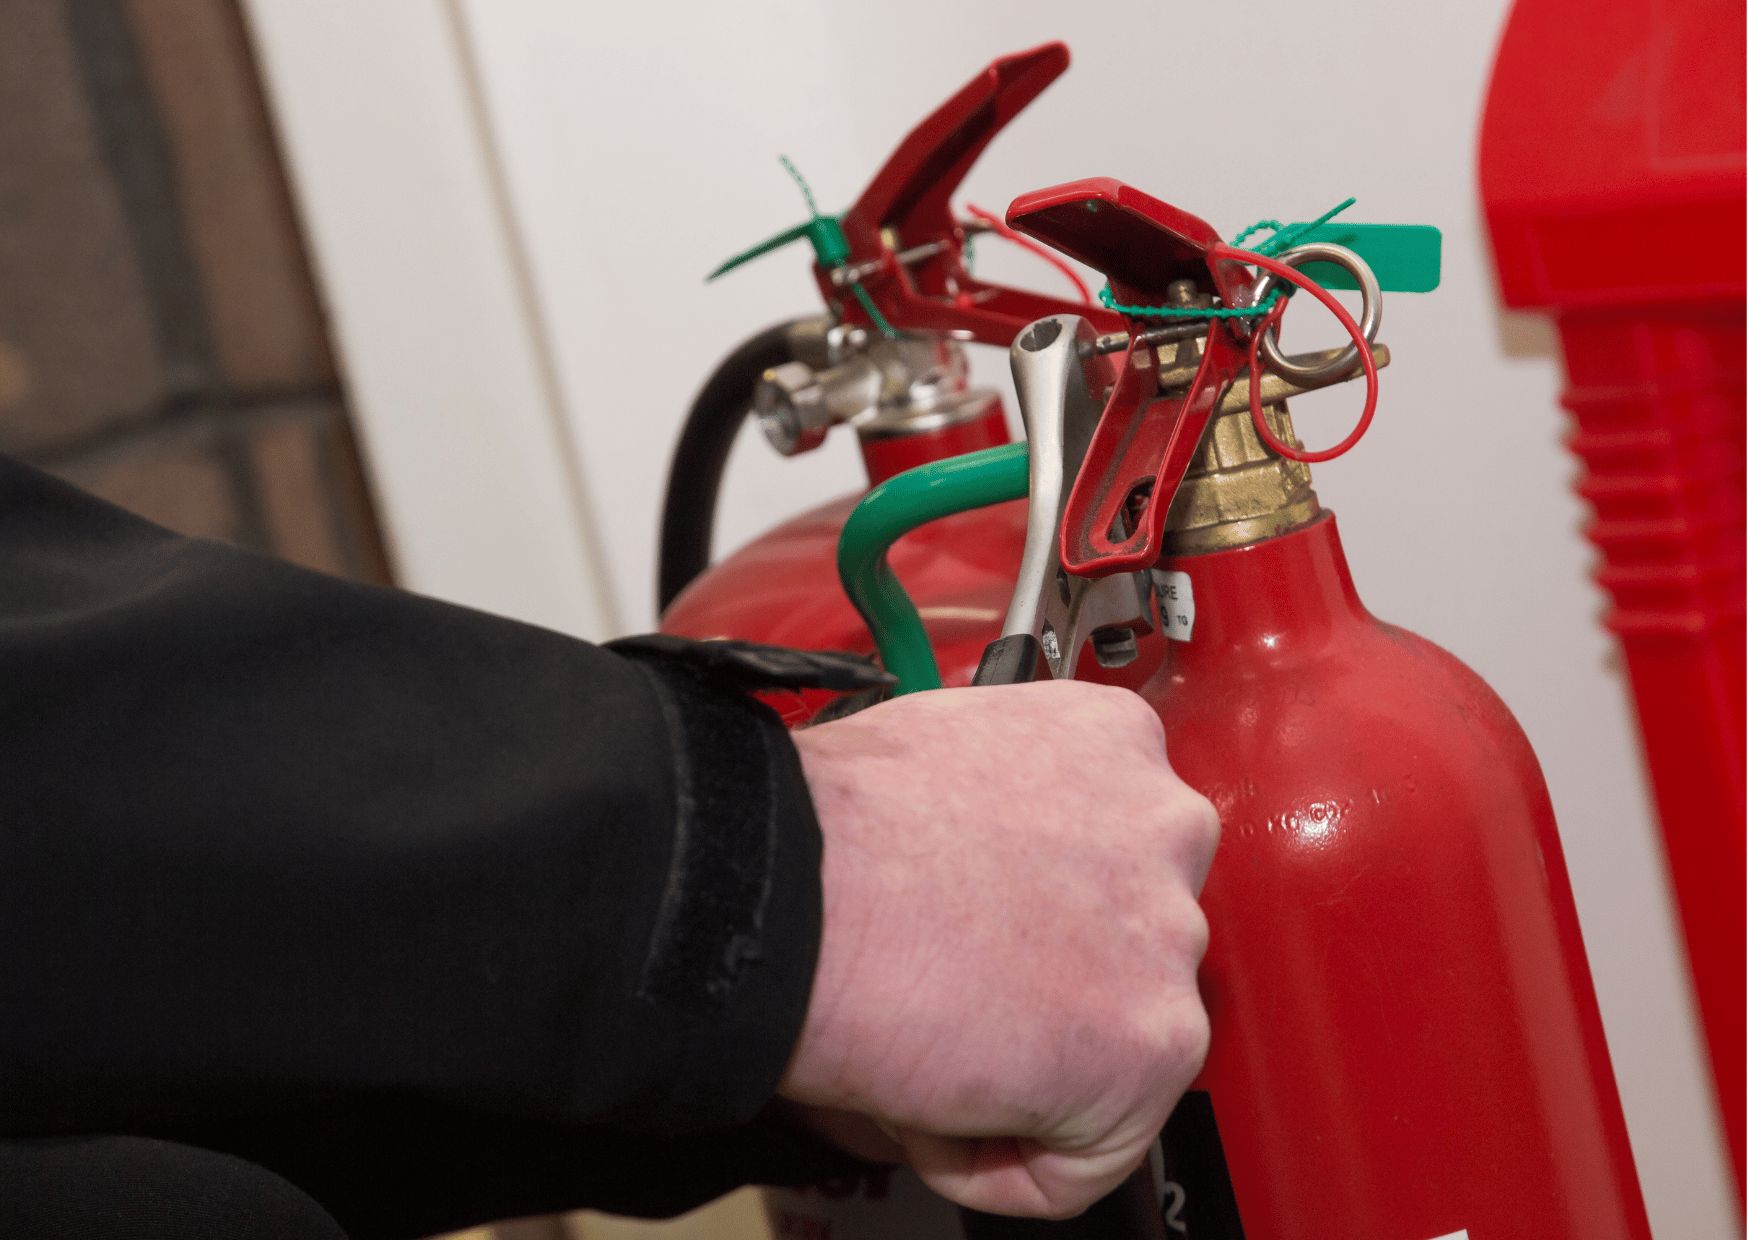 Fire extinguisher maintenance